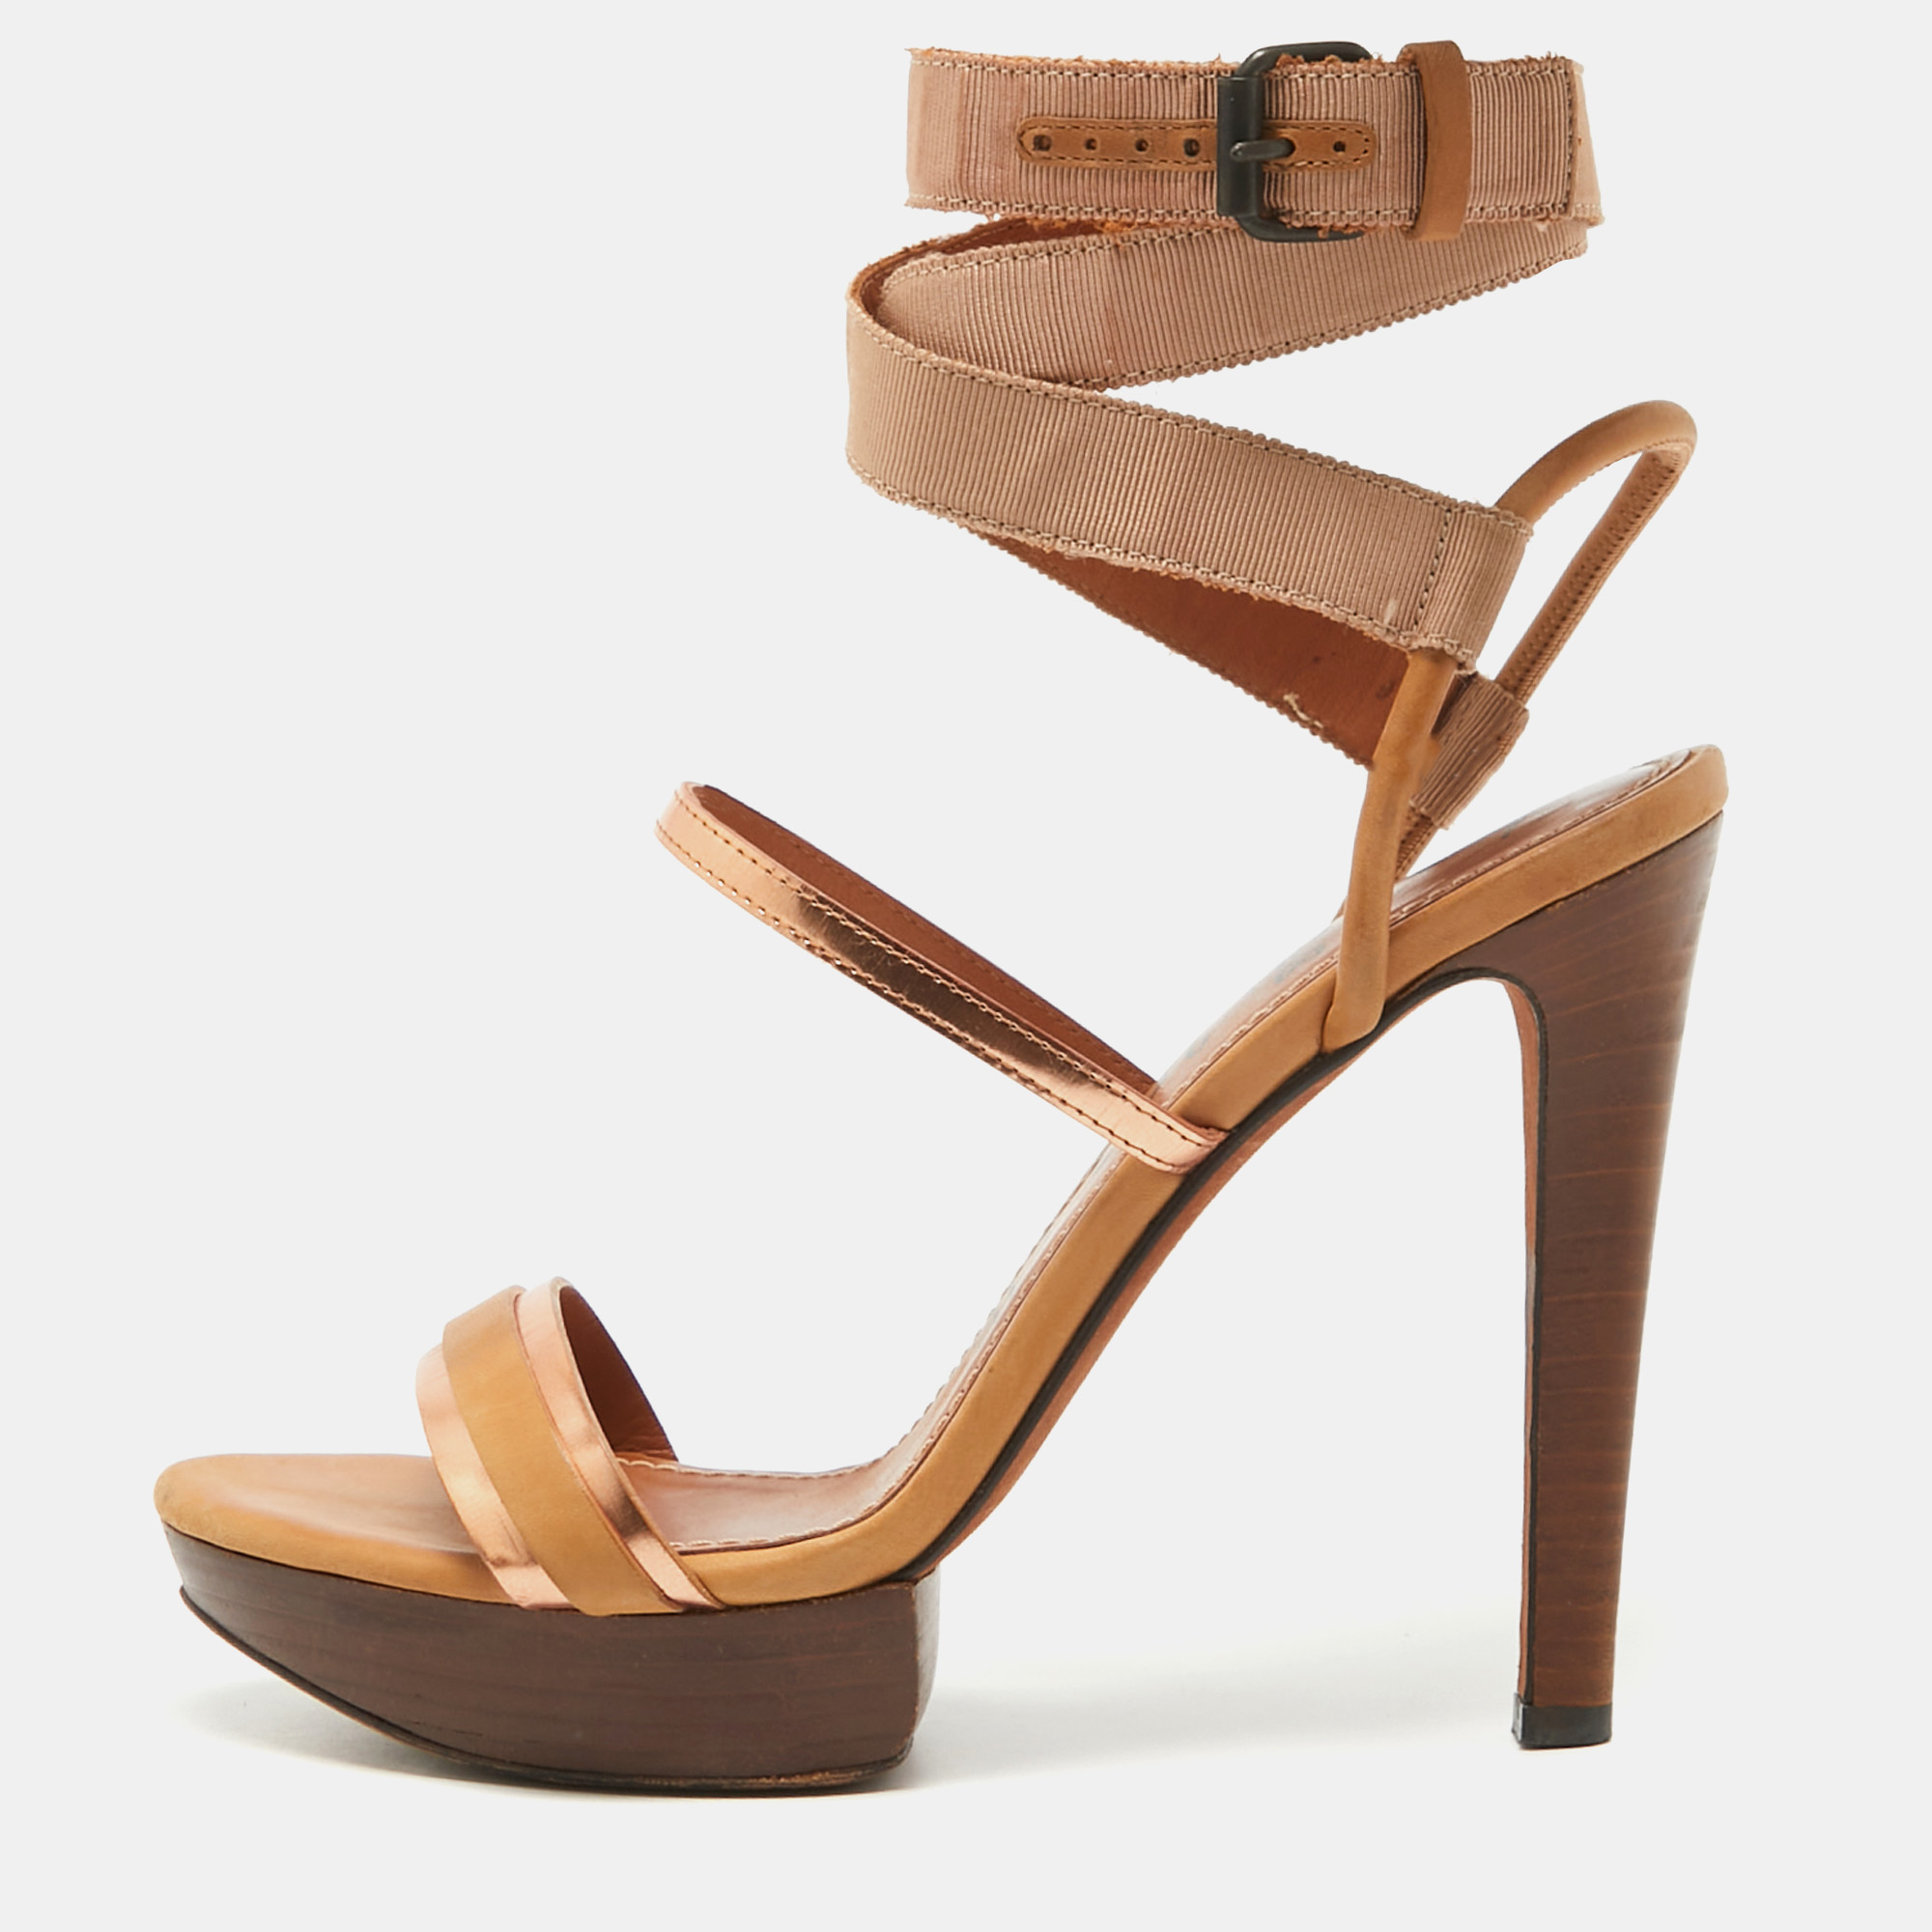 Lanvin brown/metallic leather platform ankle wrap sandals size 38